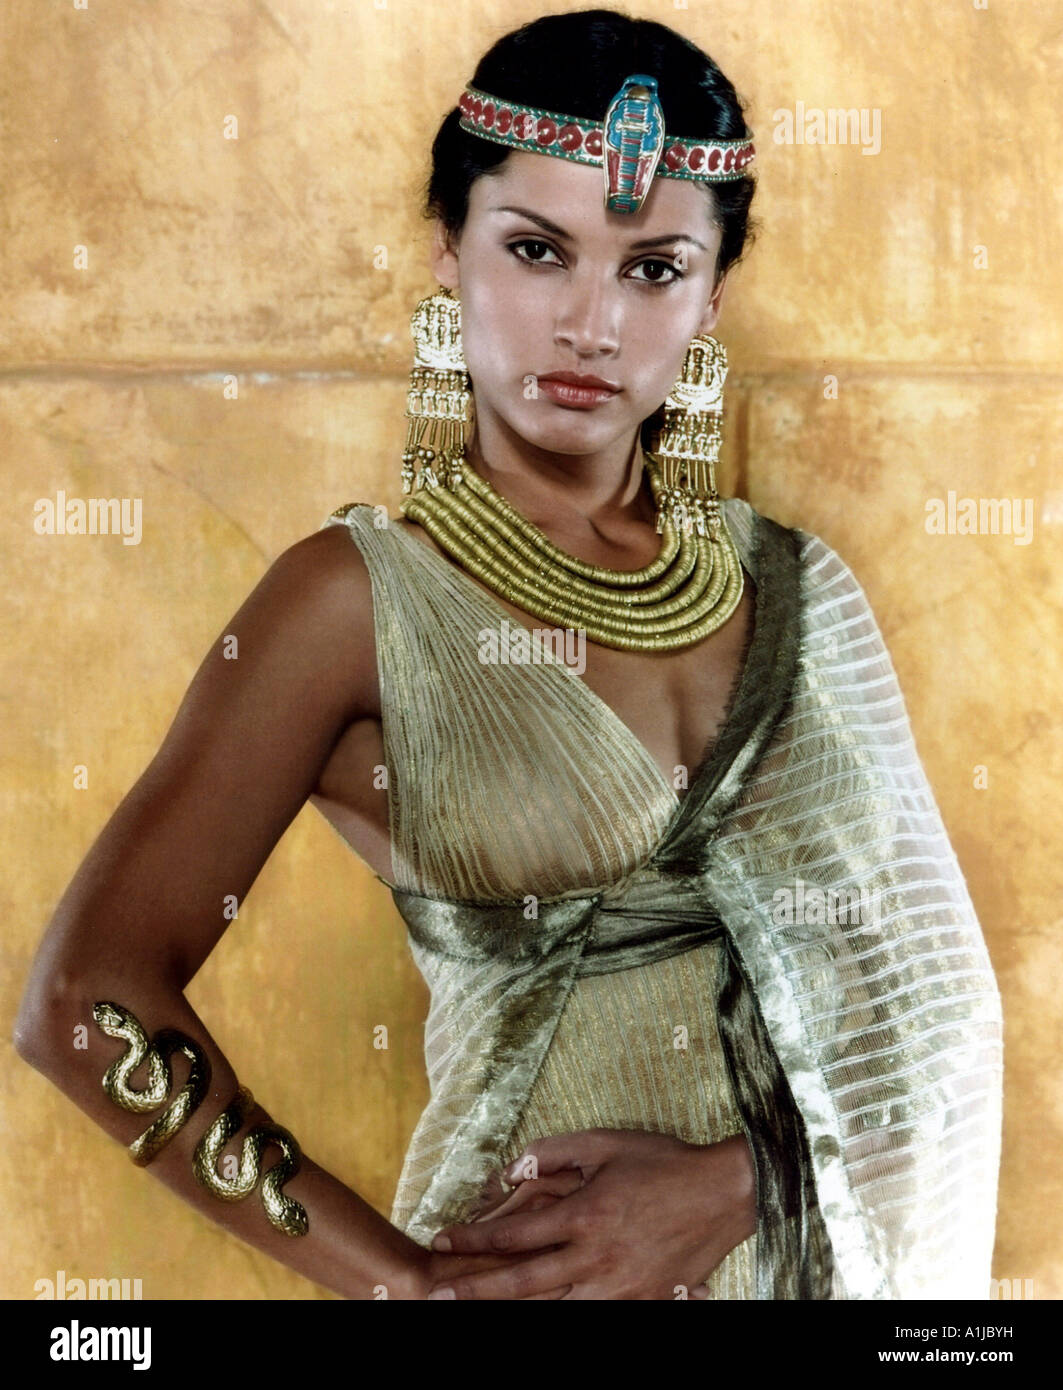 cleopatra-ano-1999-director-franc-roddam-leonor-varela-a1jbyh.jpg